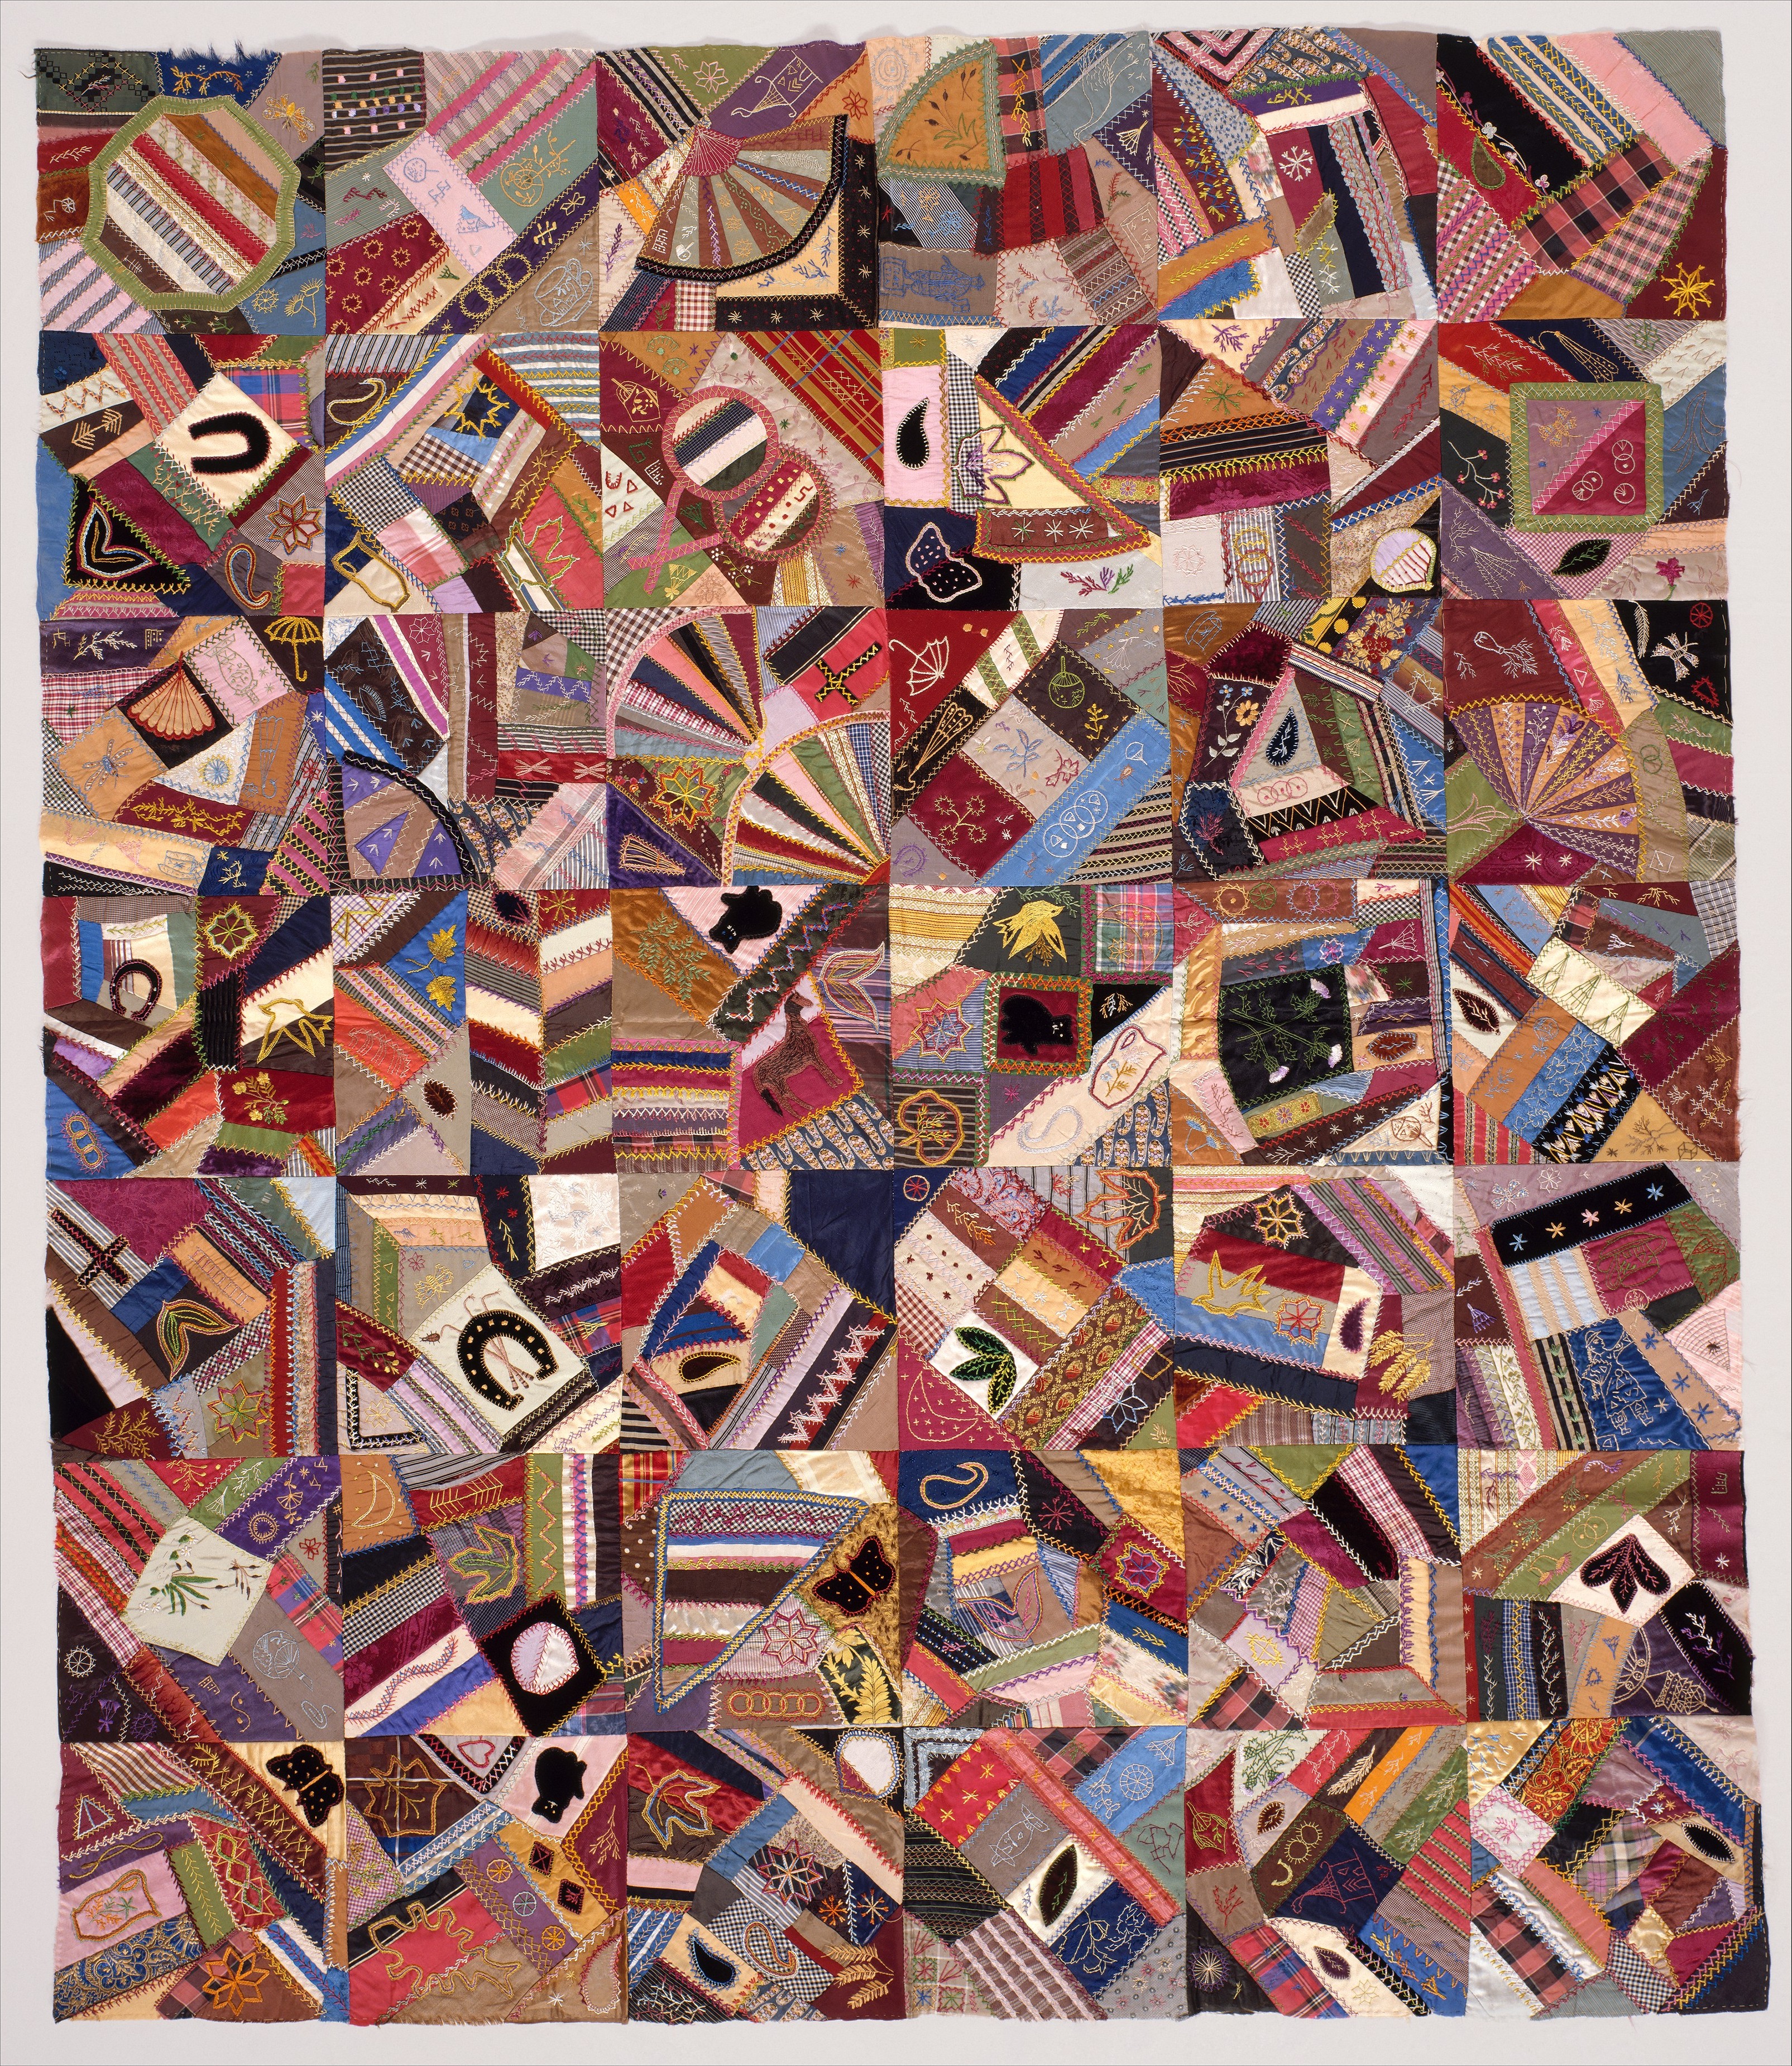 Quilt Top, Crazy pattern by Onbekende Artiest - ca. 1885 - 154.3 x 132.1 cm 